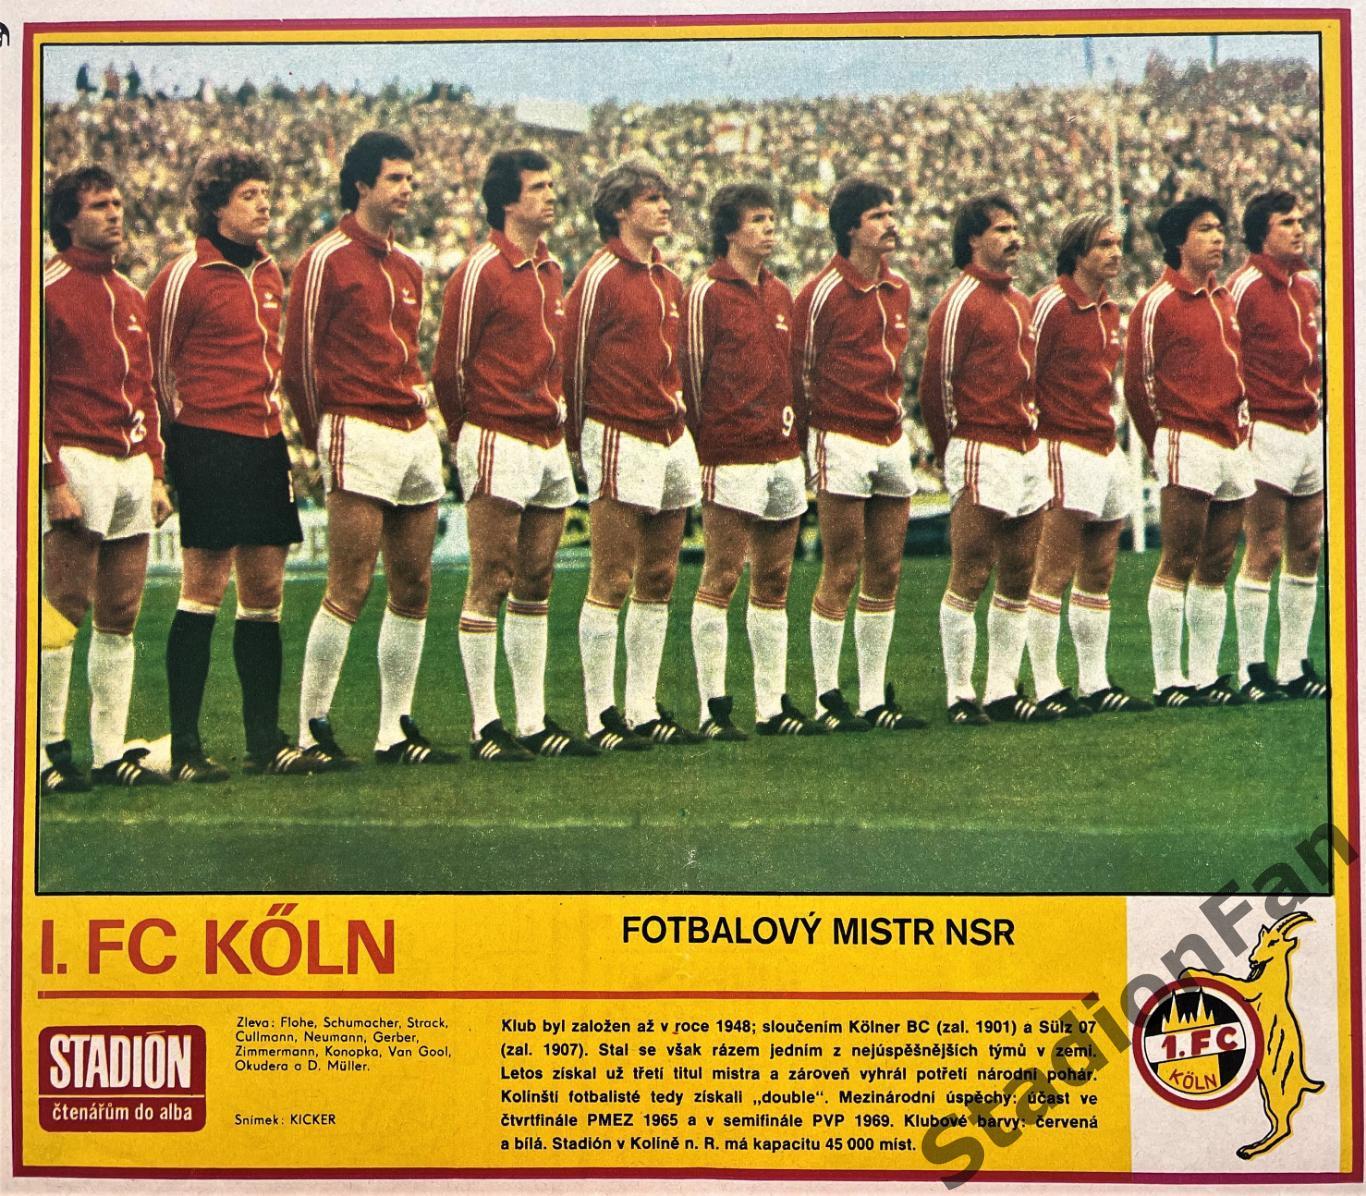 Постер из журнала Стадион (Stadion) - K?ln, 1978.